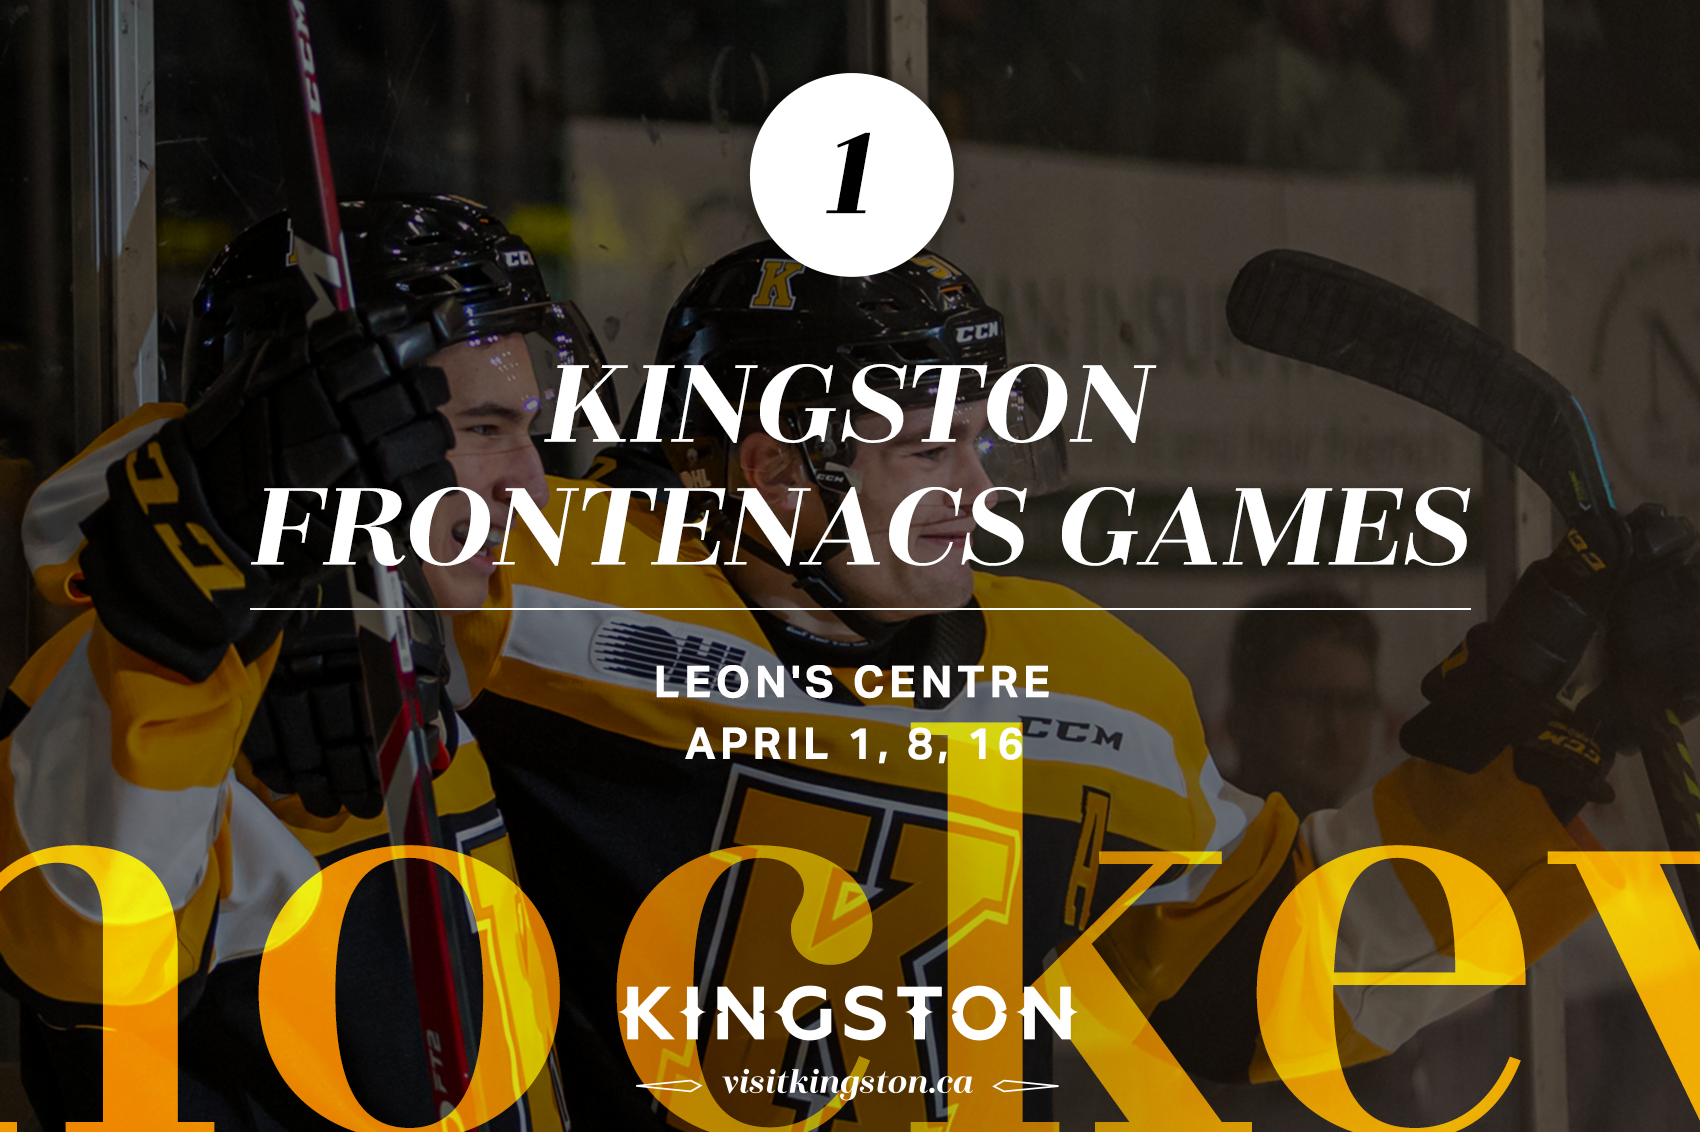 Kingston Frontenacs Games